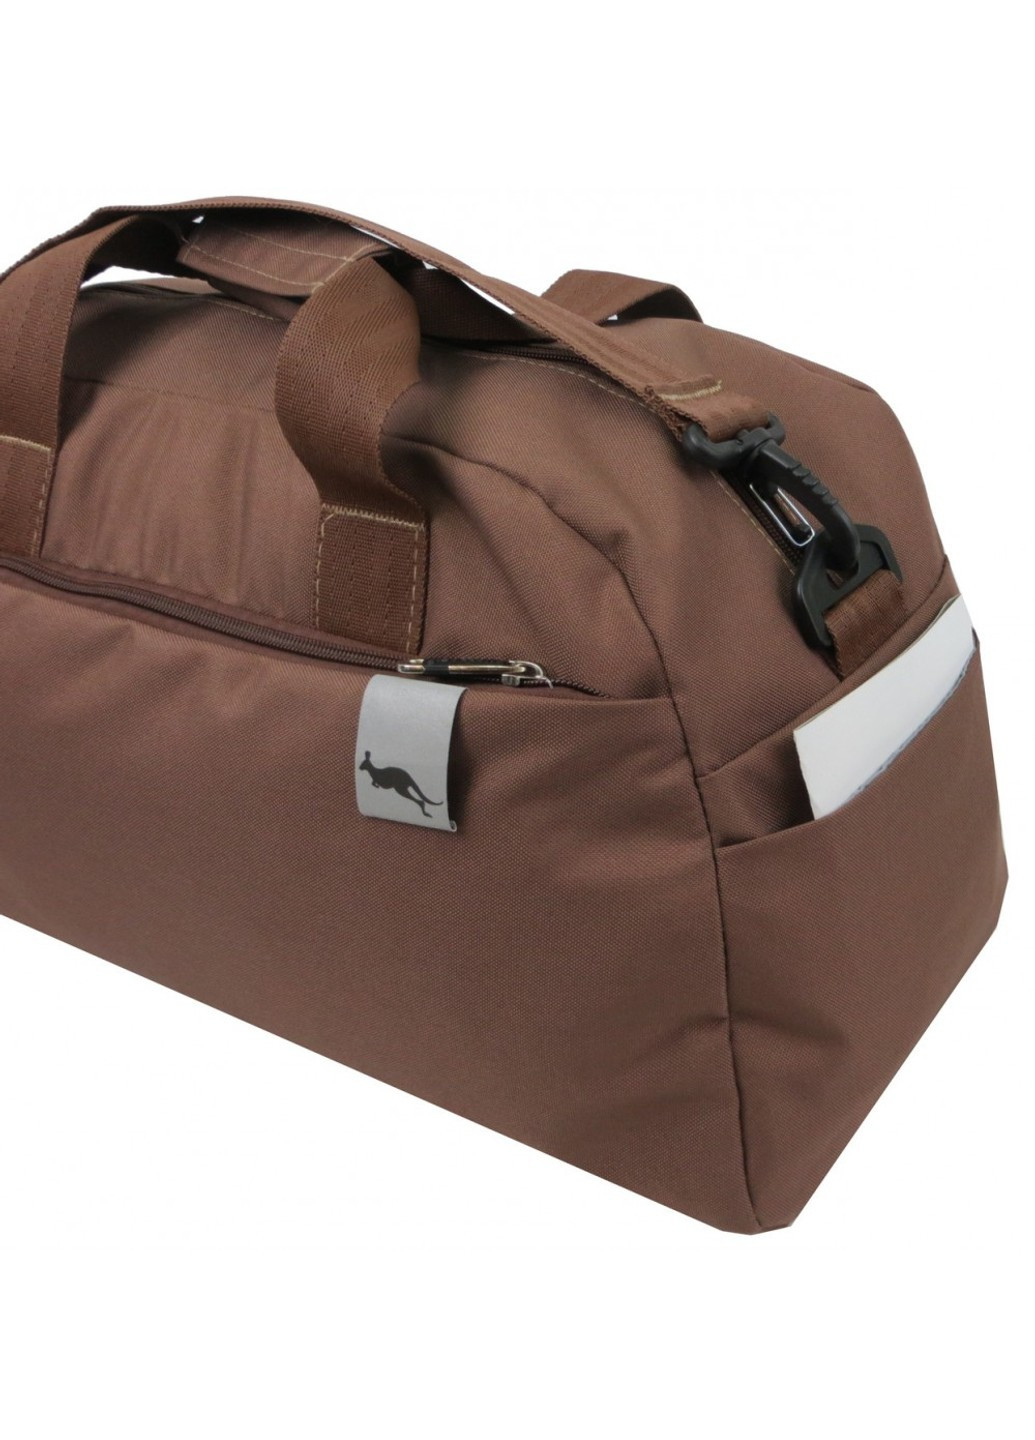 Спортивная сумка 18 л 2151 коричневая Wallaby (278050464)